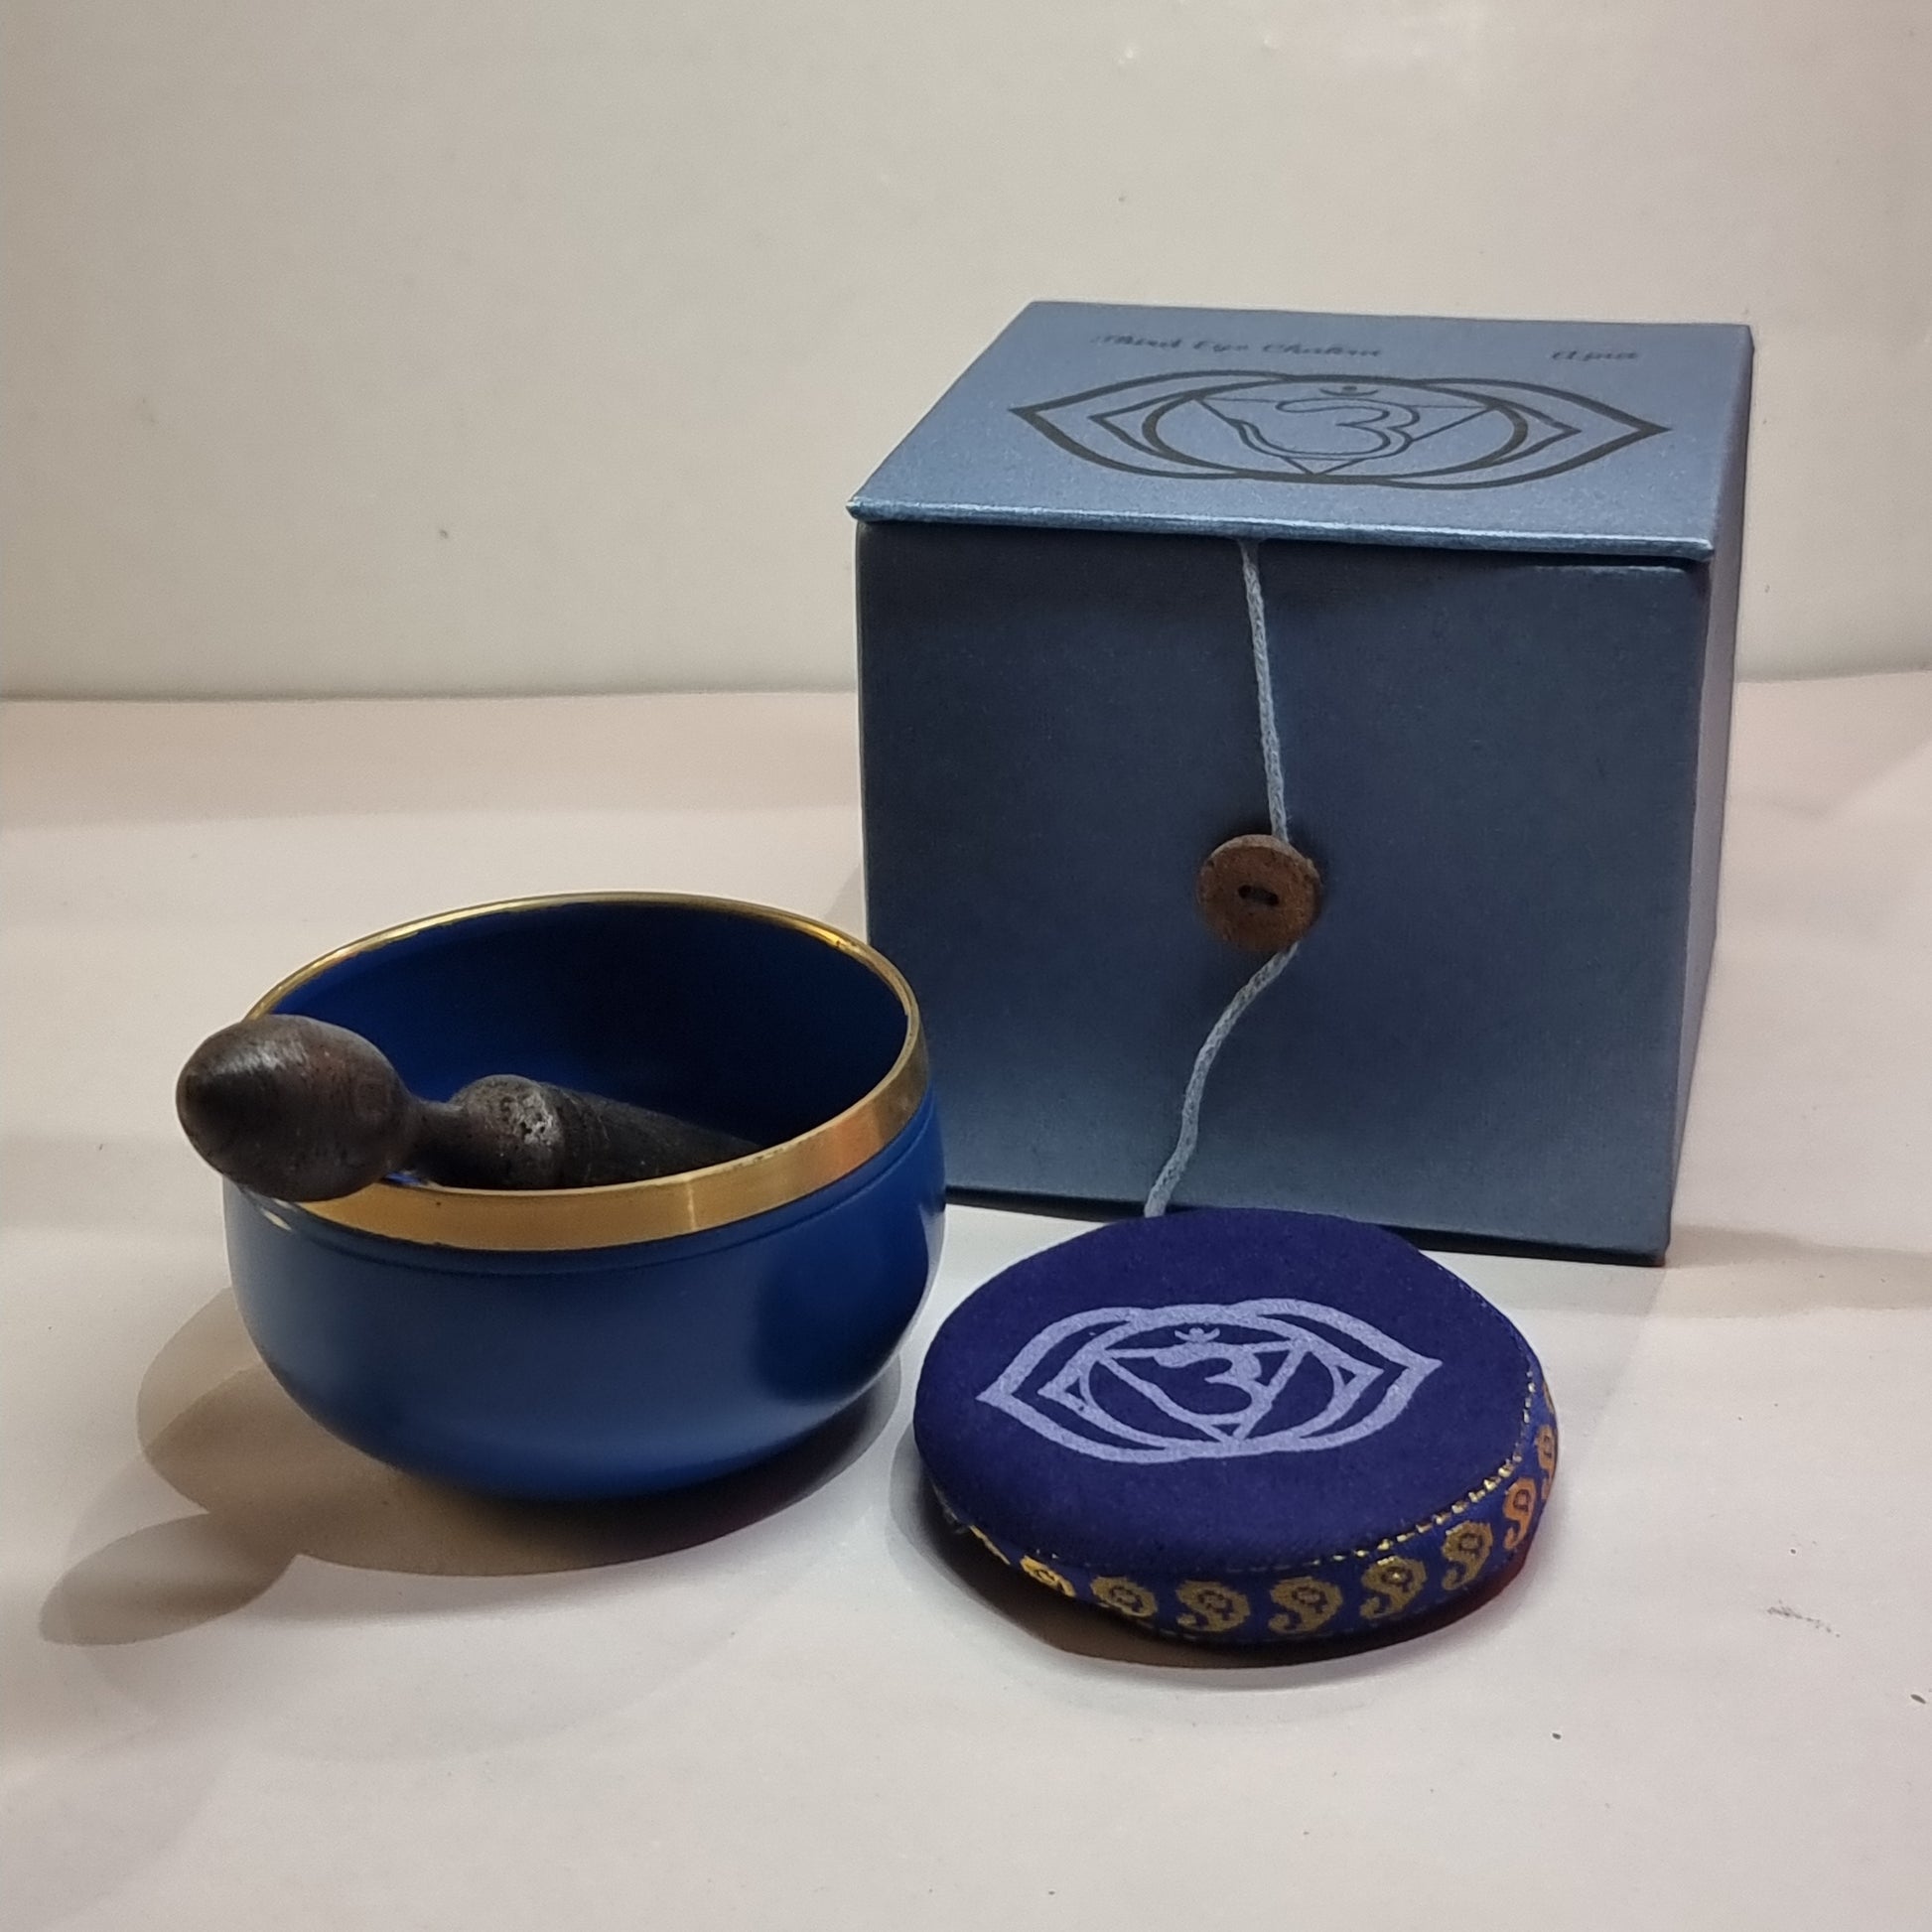 Singing bowl gift set - third eye chakra - Rivendell Shop